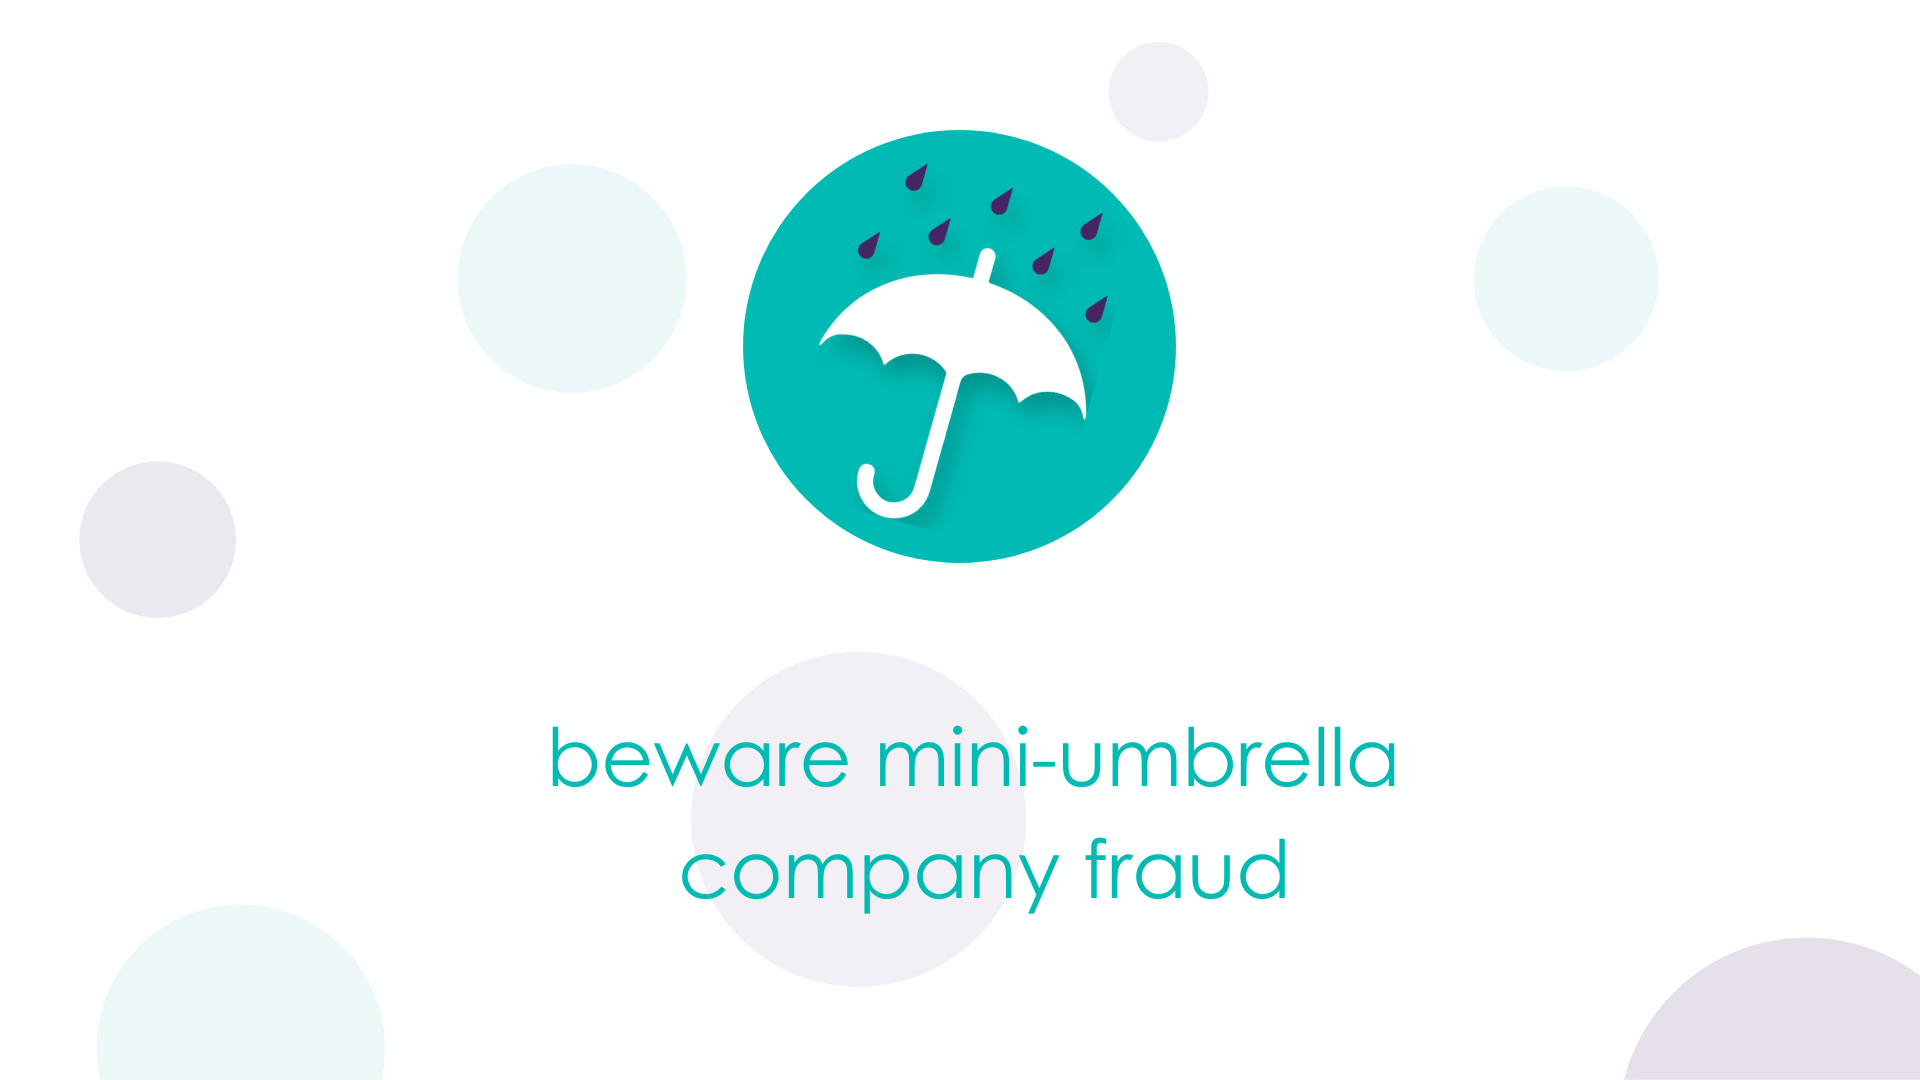 beware mini-umbrella company fraud